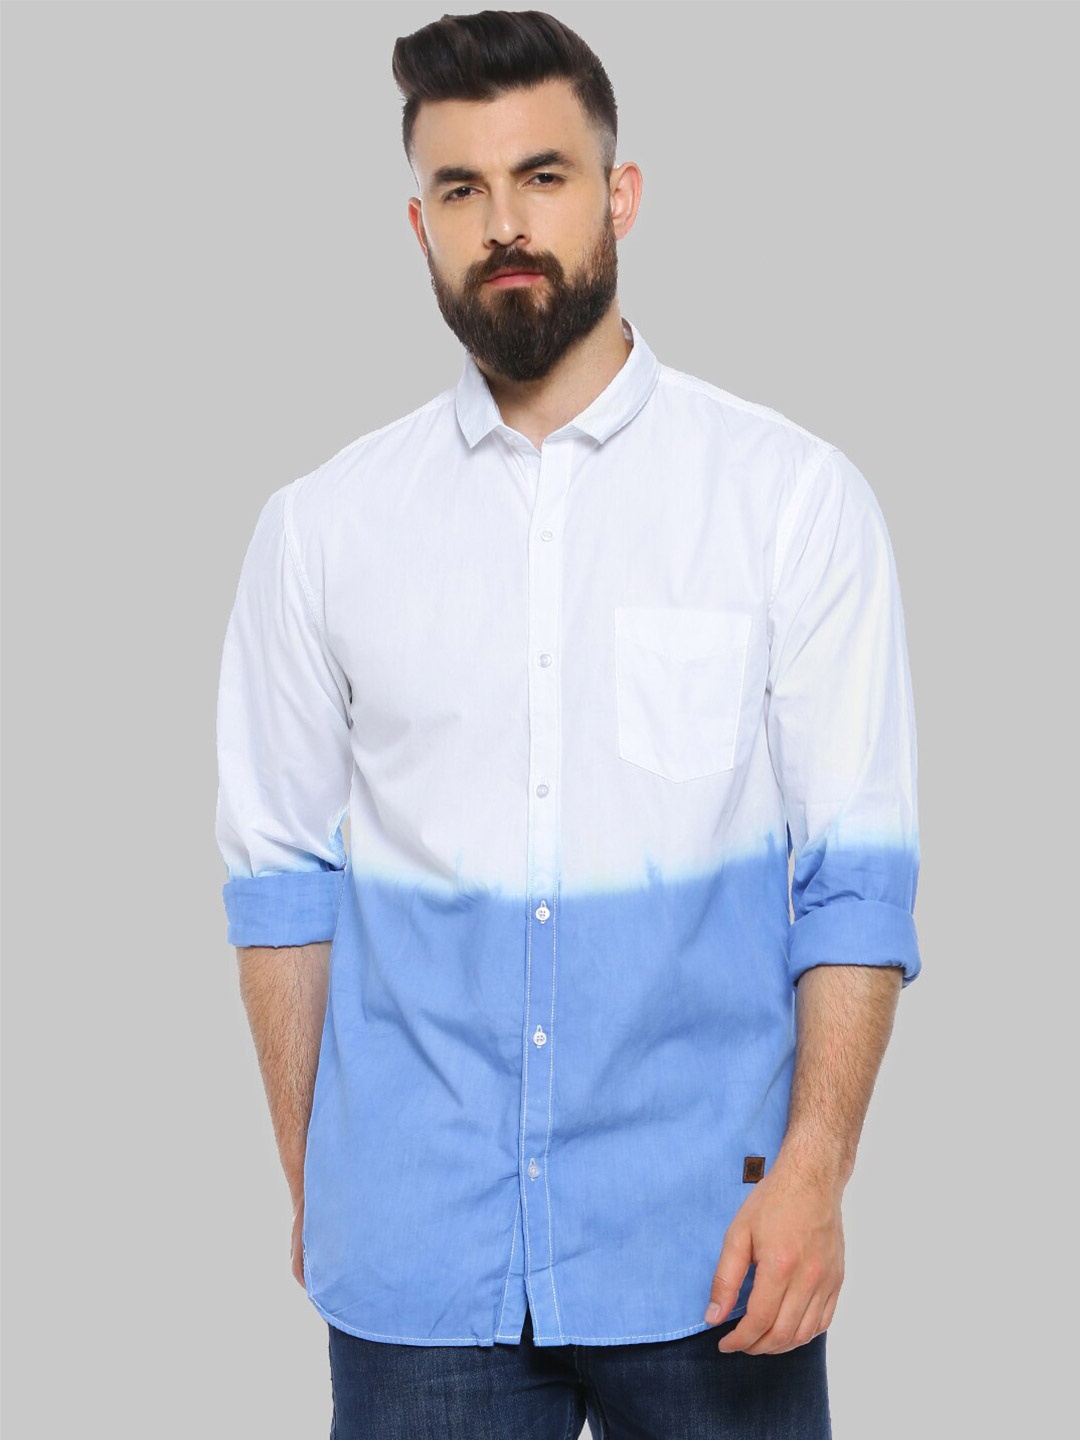 

Campus Sutra White & Blue Classic Colourblocked Cotton Casual Shirt